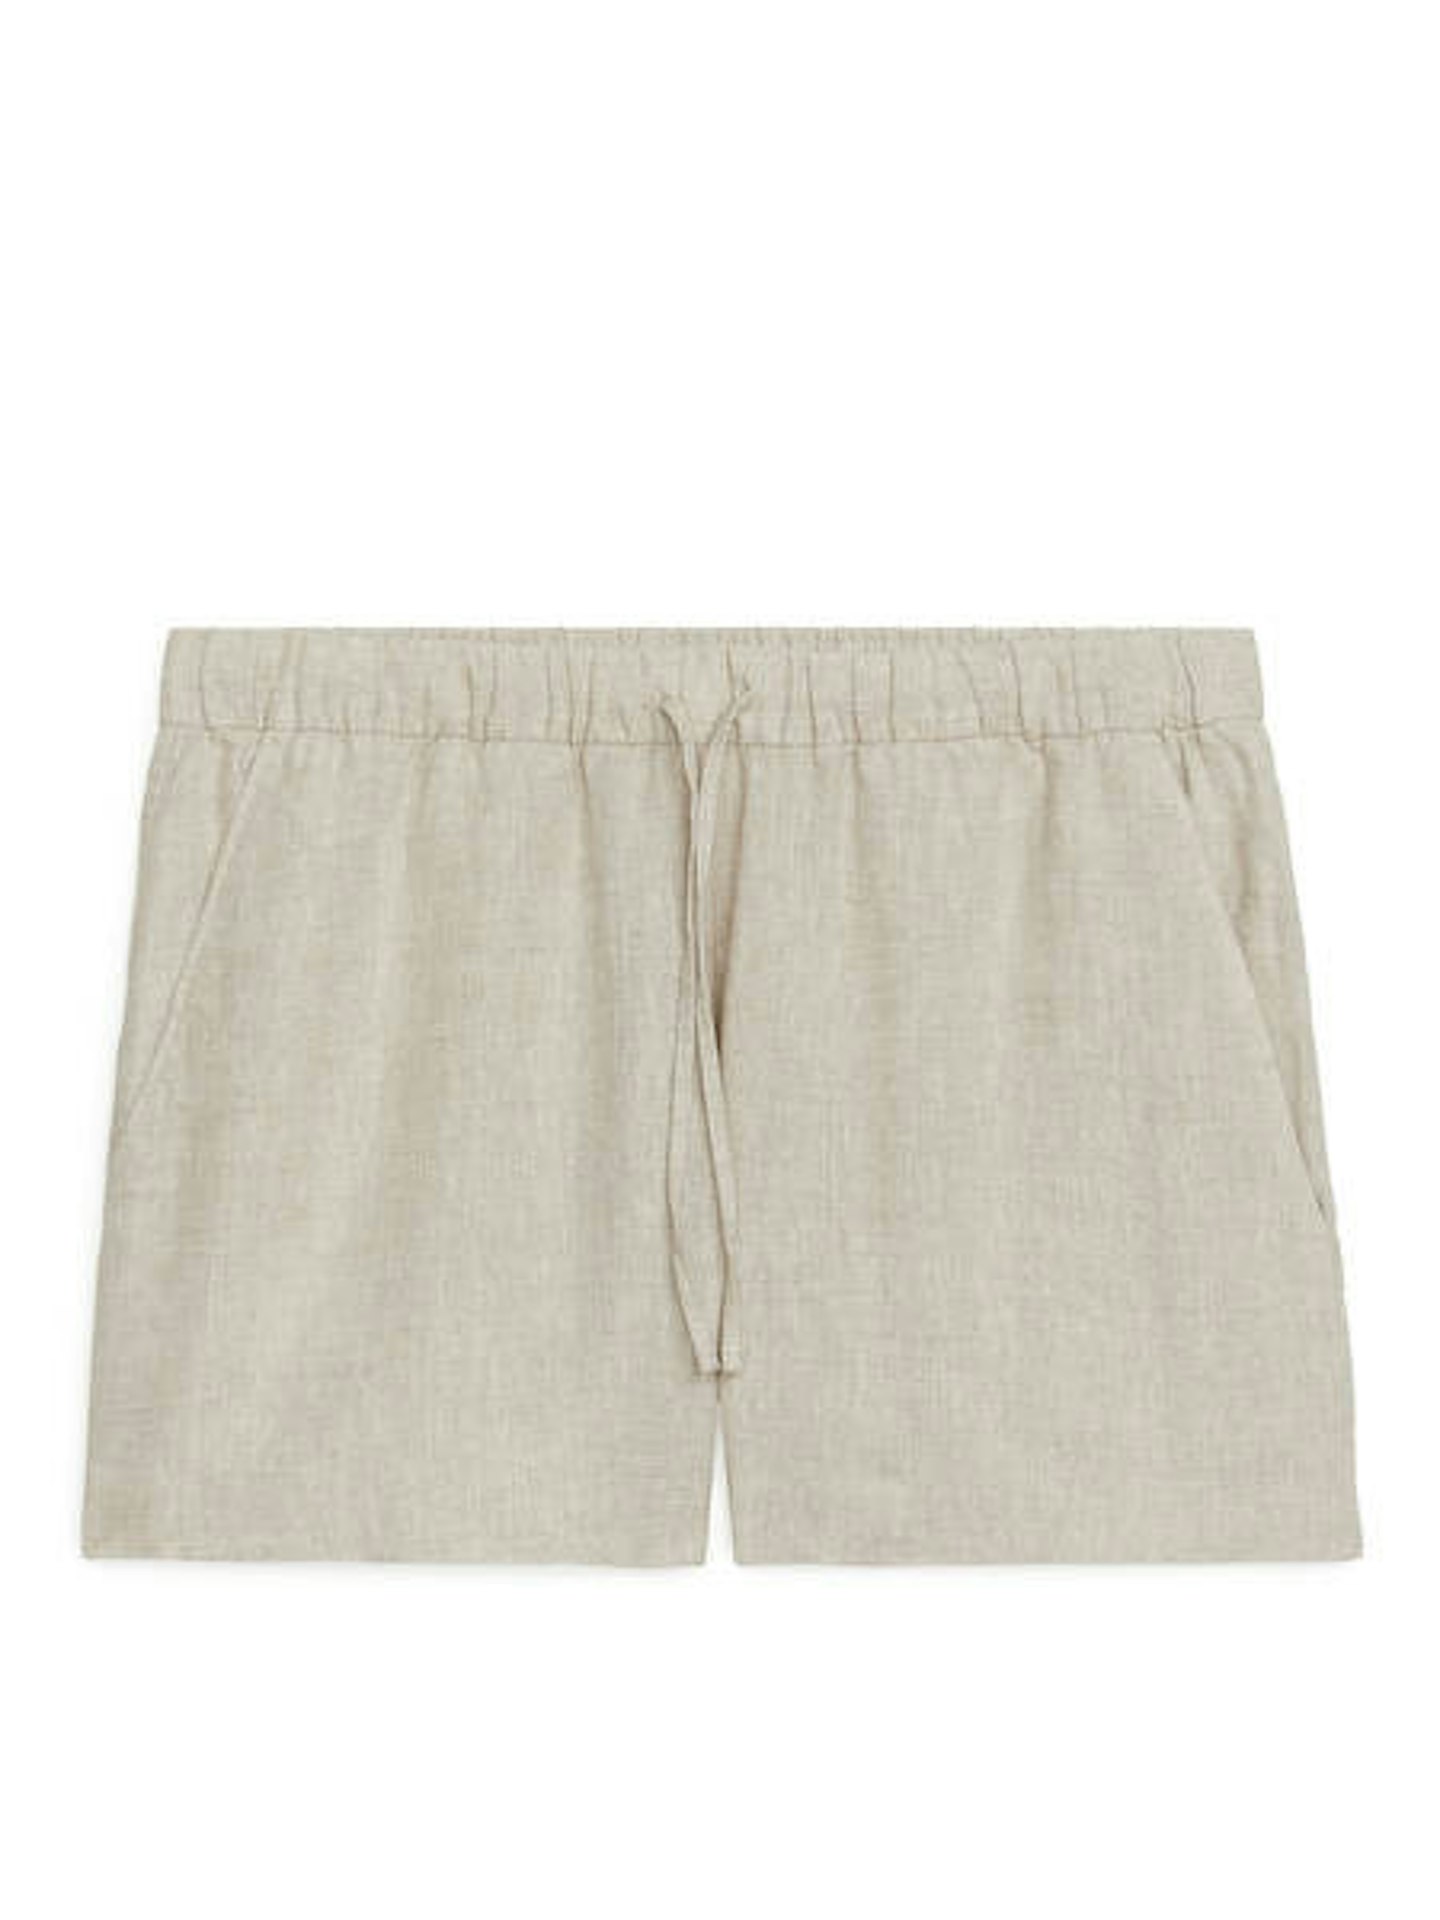 Arket, Linen Shorts, £35